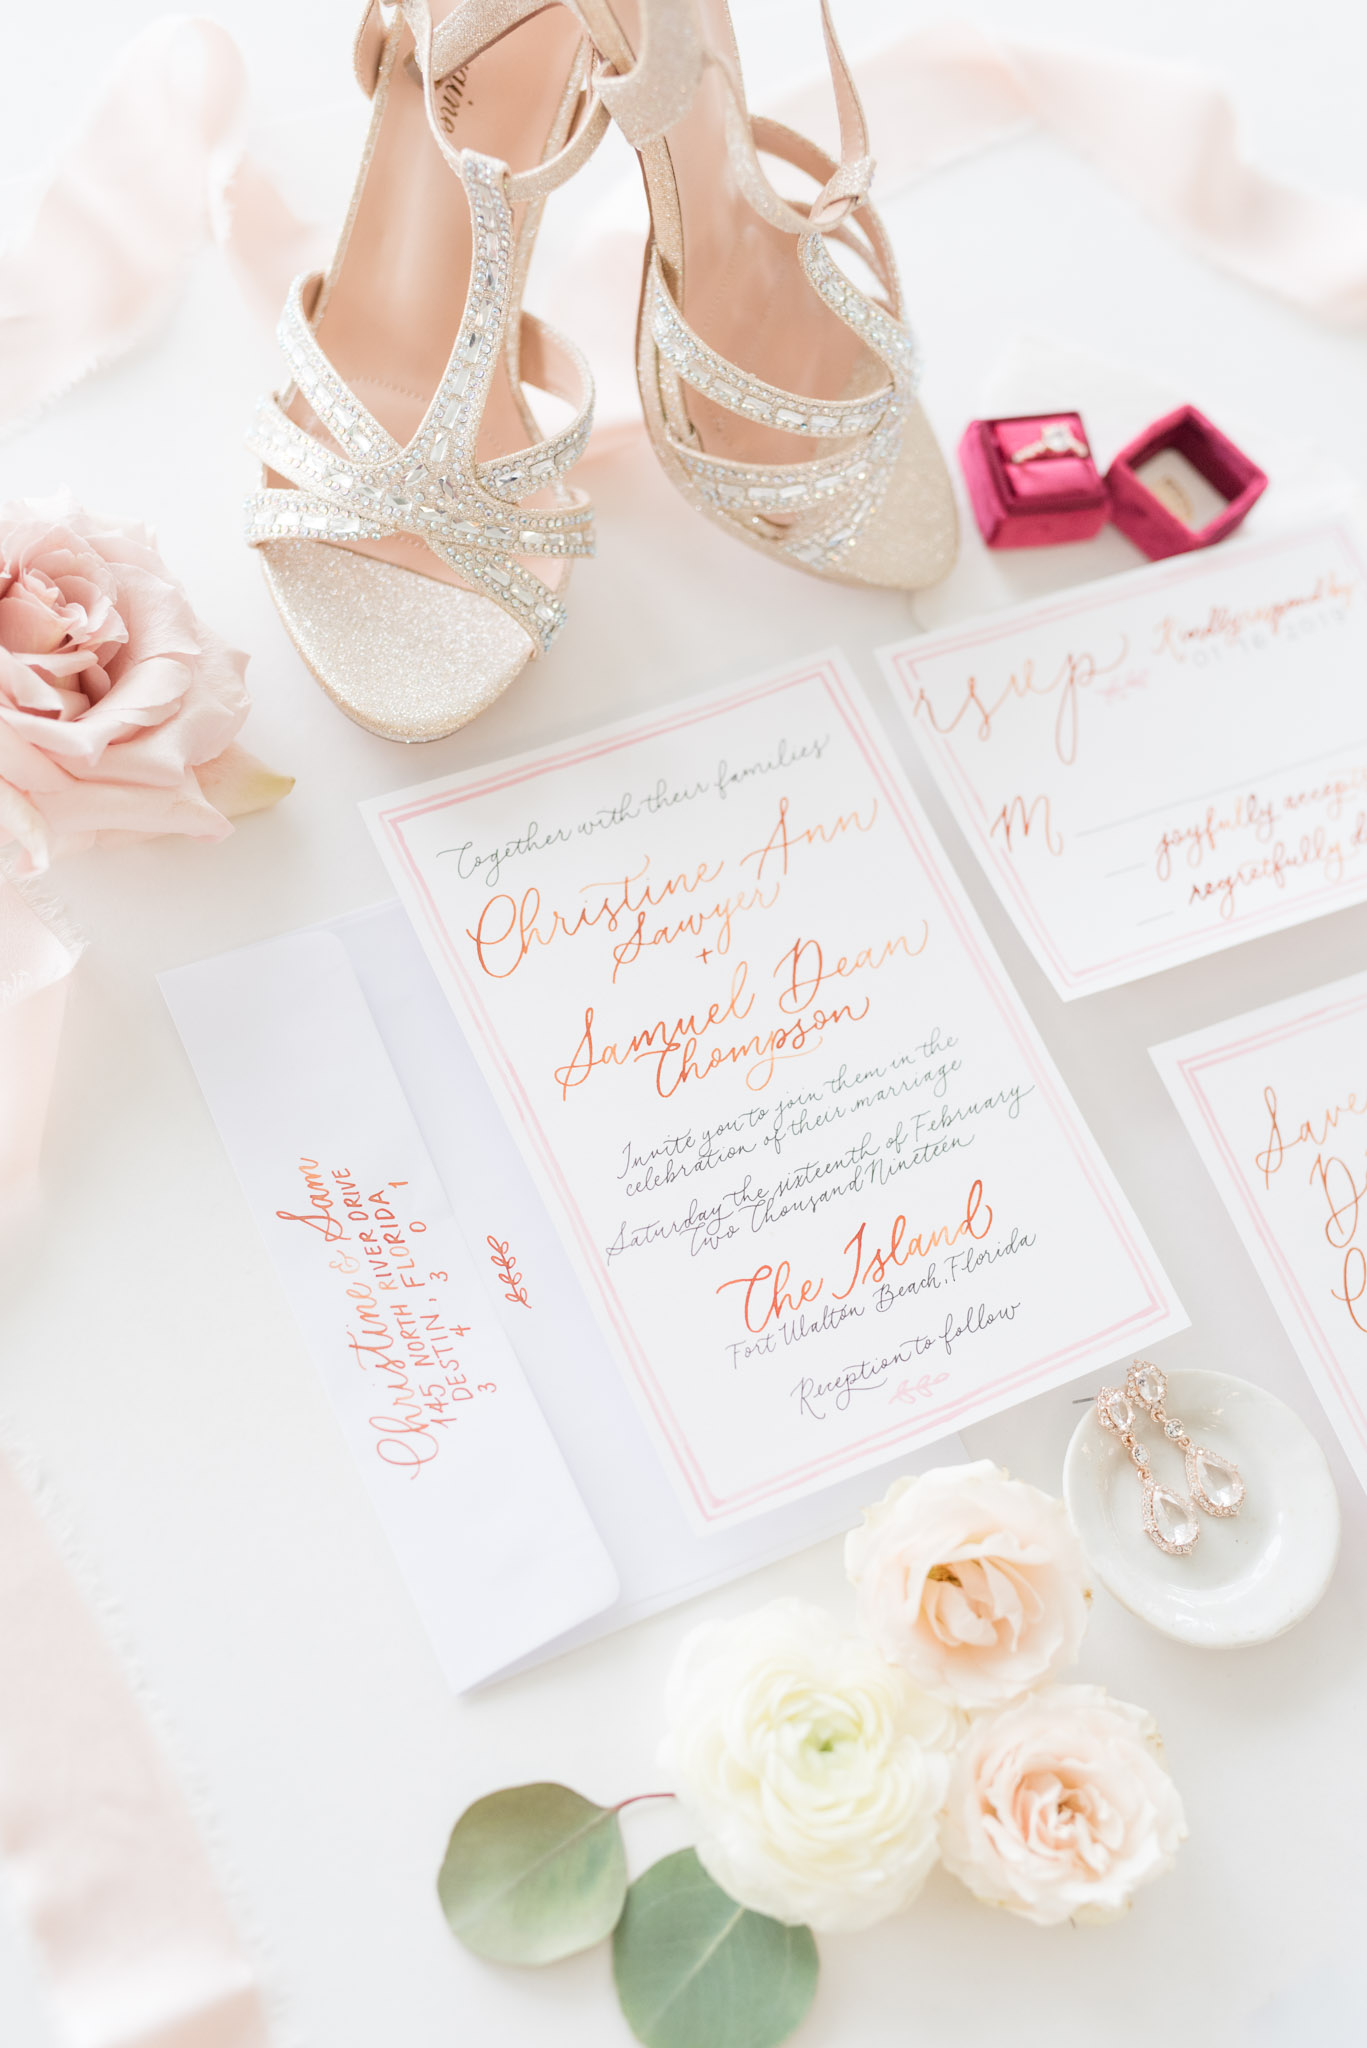 Wedding invitations and flowers.